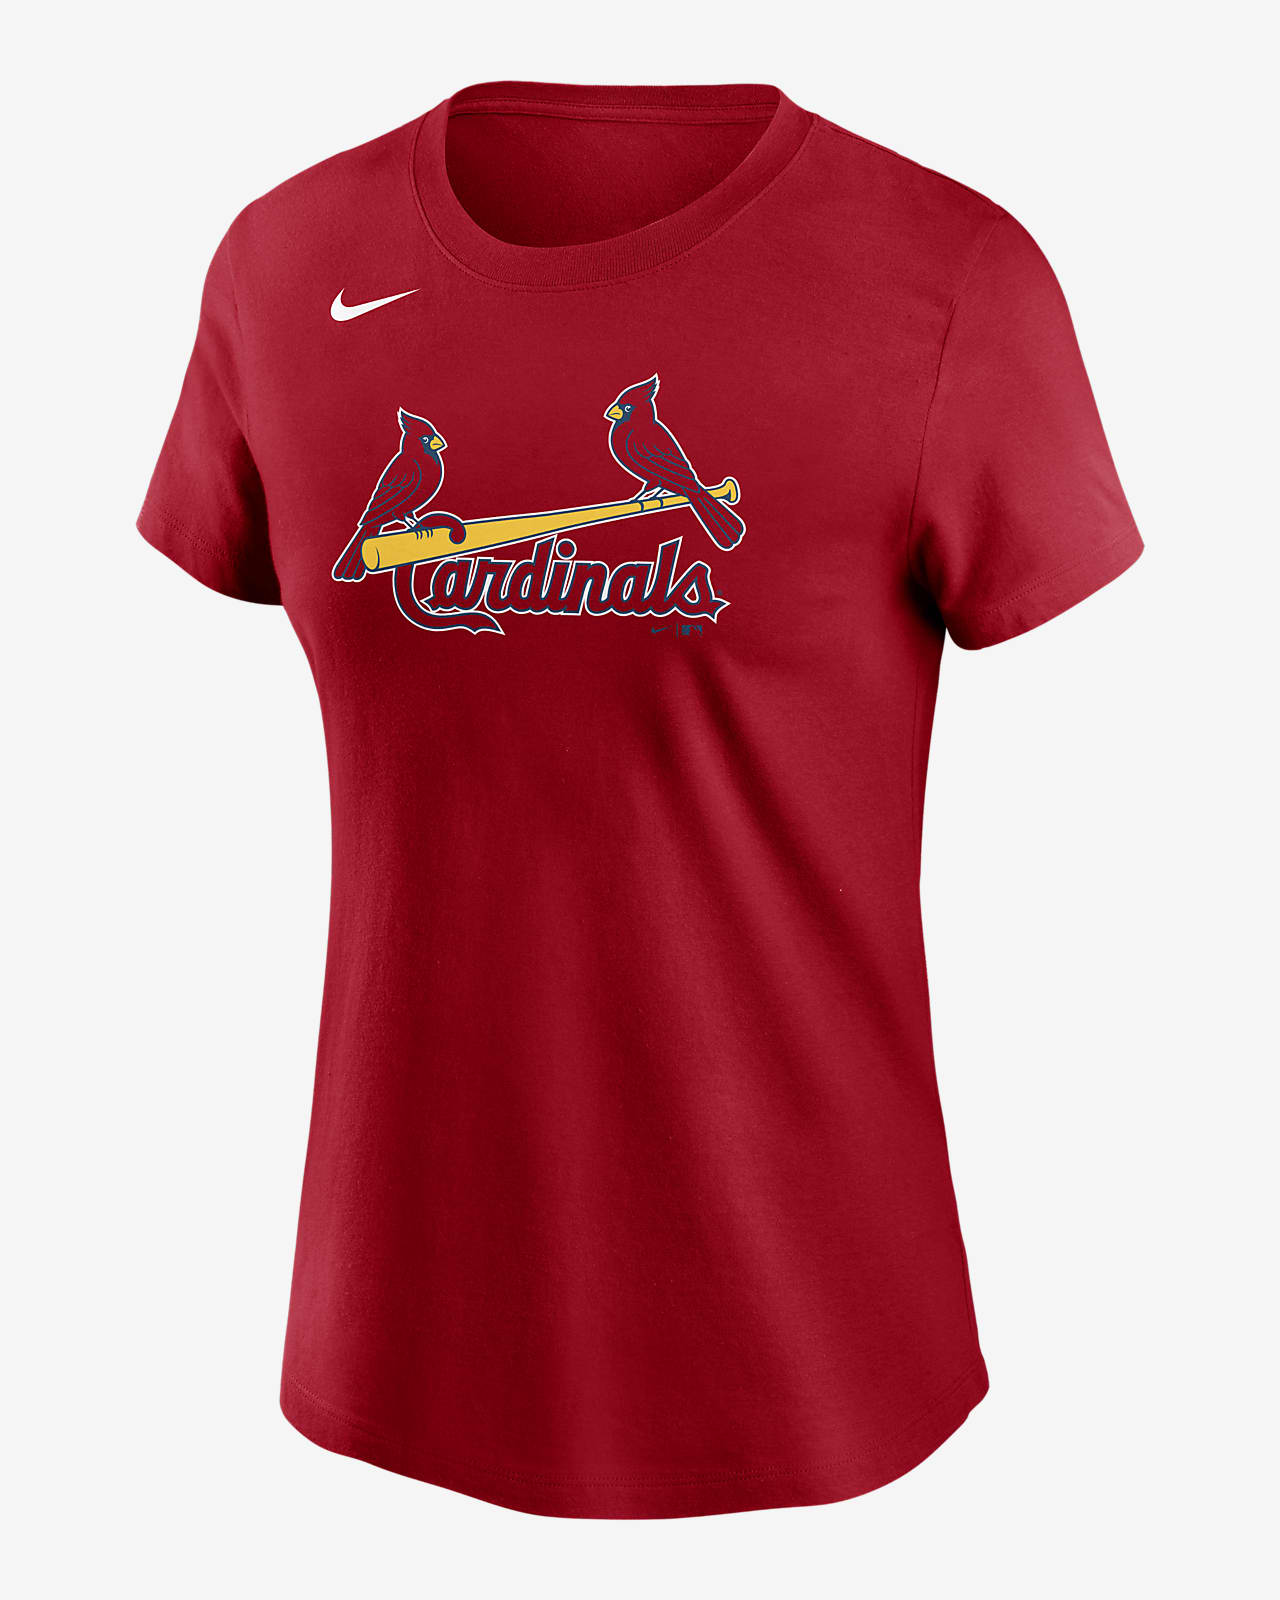 MLB St. Louis Cardinals (Yadier Molina) Women's T-Shirt